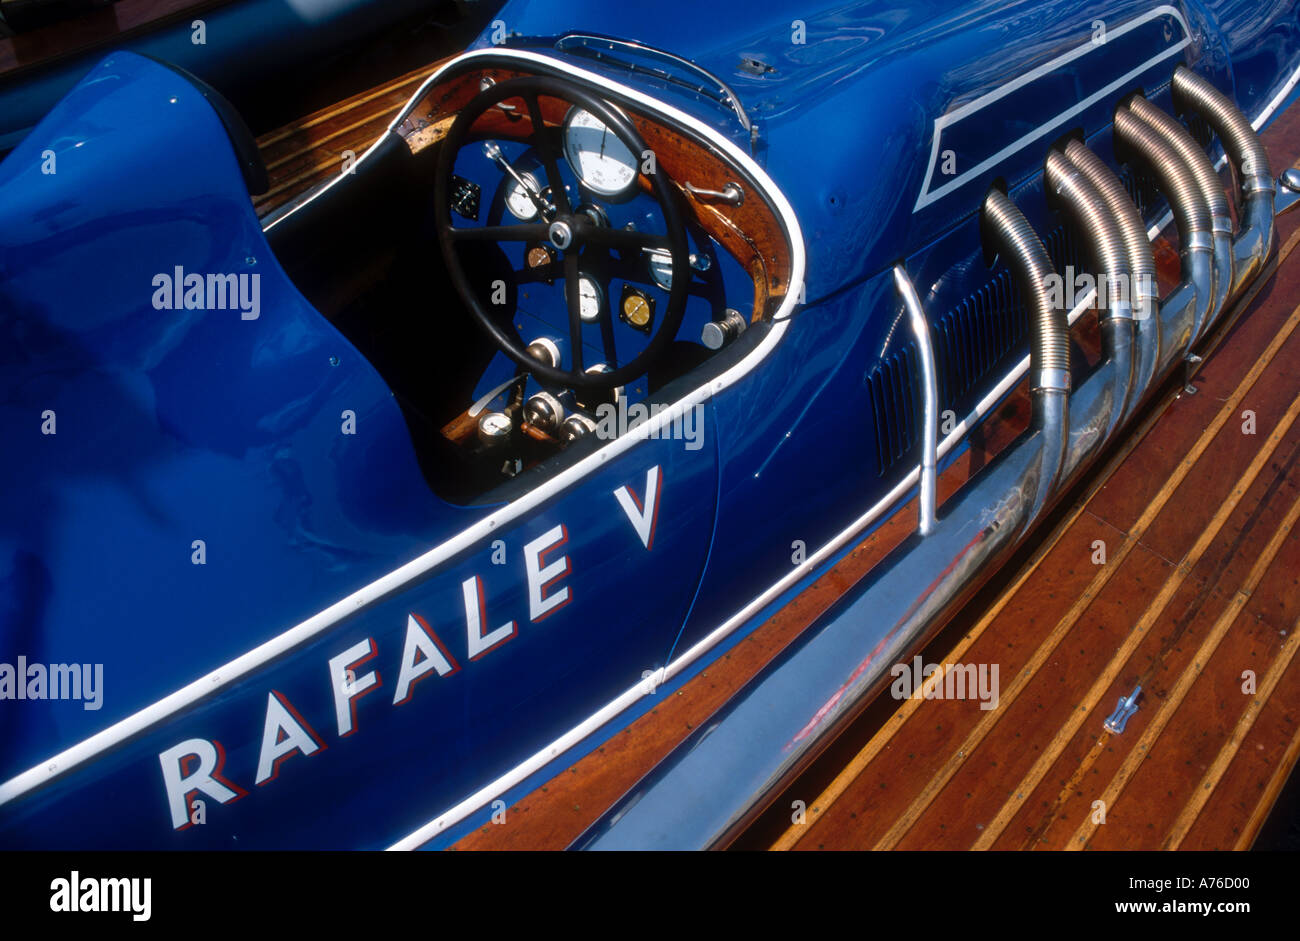 The 1935 hydroplane Rafale V Stock Photo